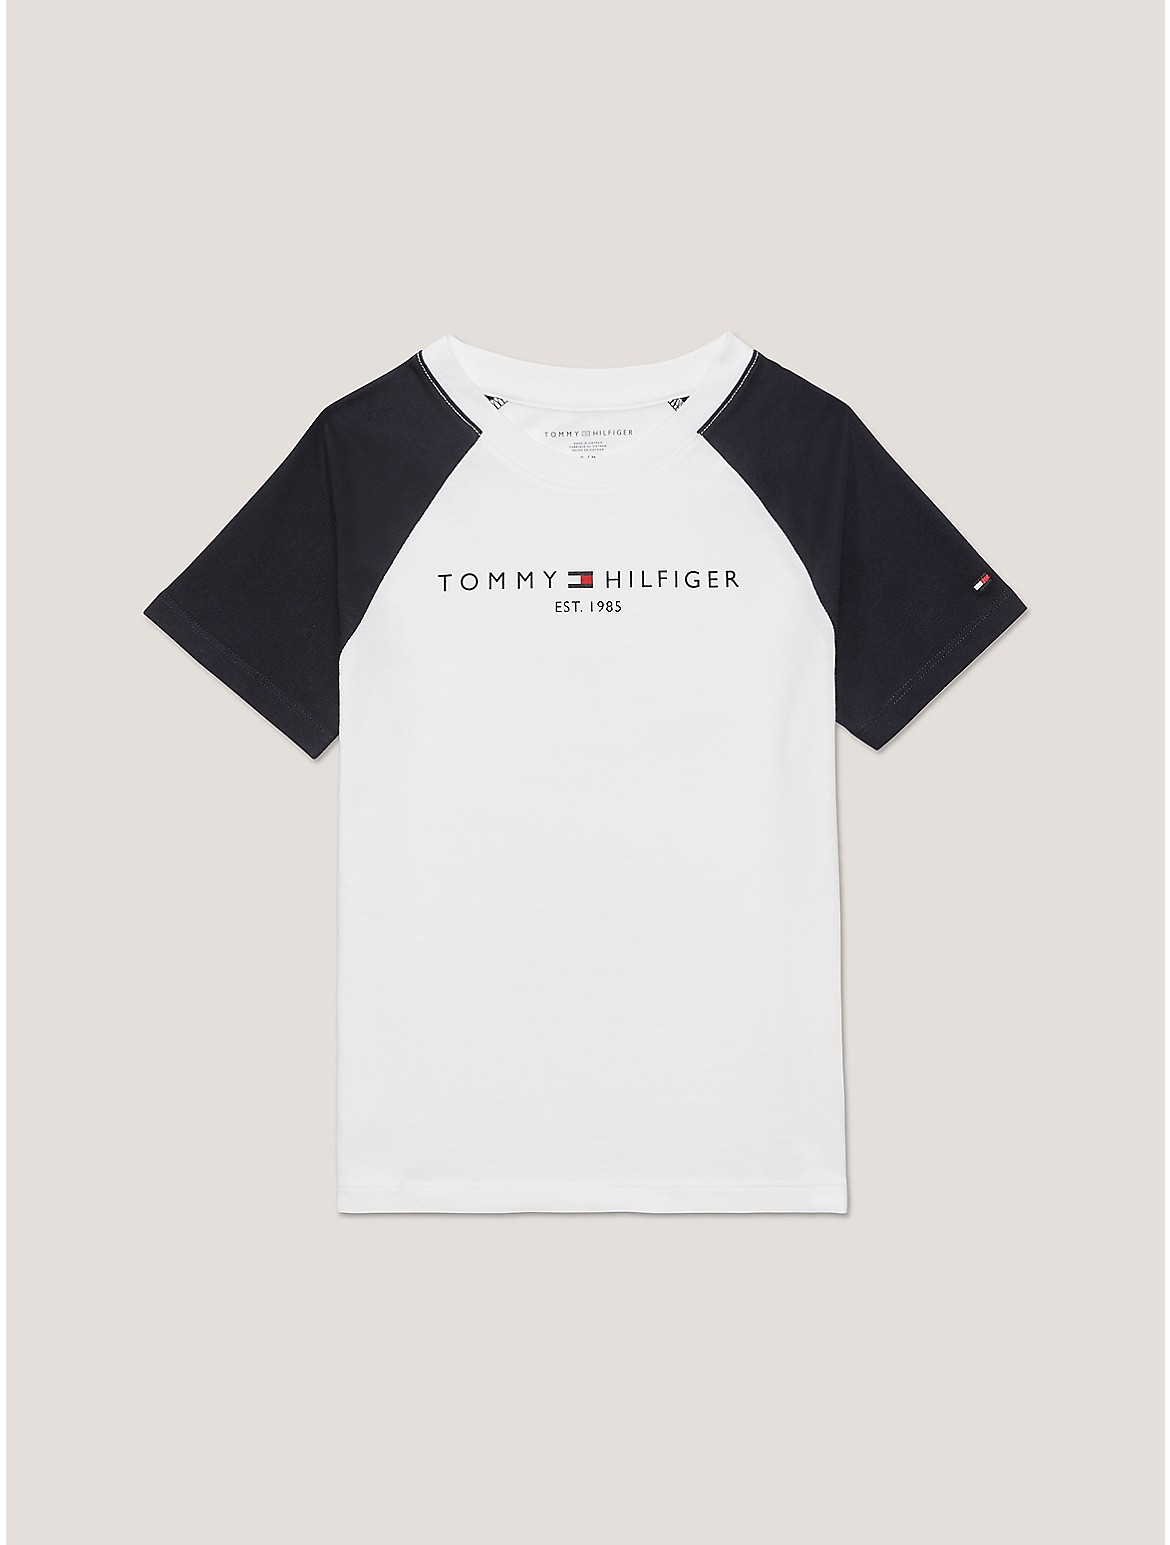 Tommy Hilfiger Boys' Kids' Baseball T-Shirt - White - L